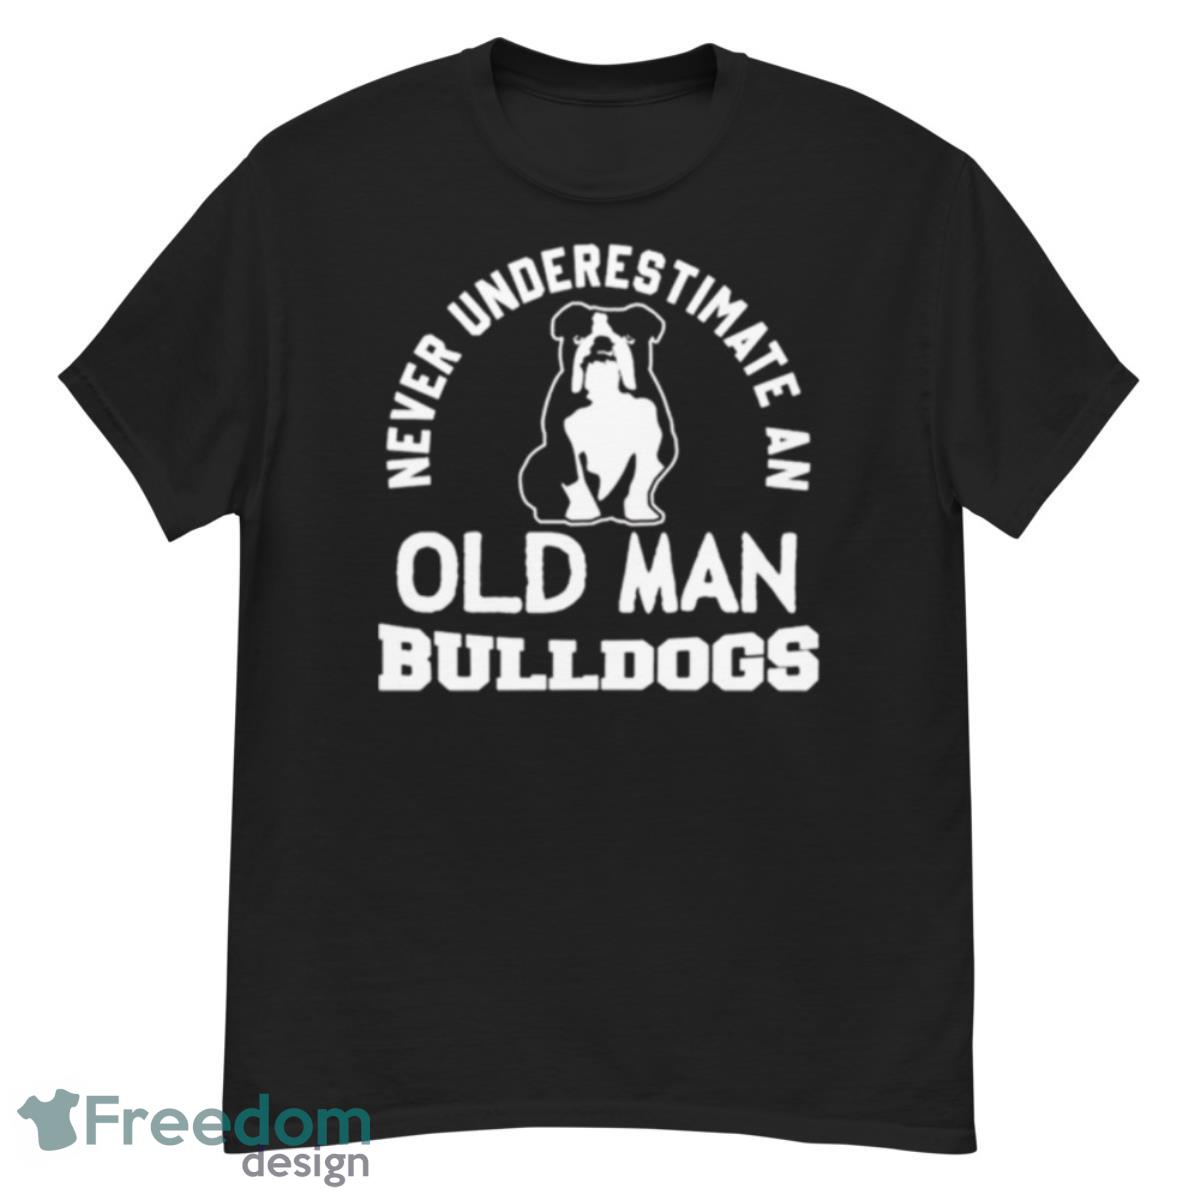 Georgia Bulldogs Never underestimate an old man Bulldogs shirt - G500 Men’s Classic T-Shirt